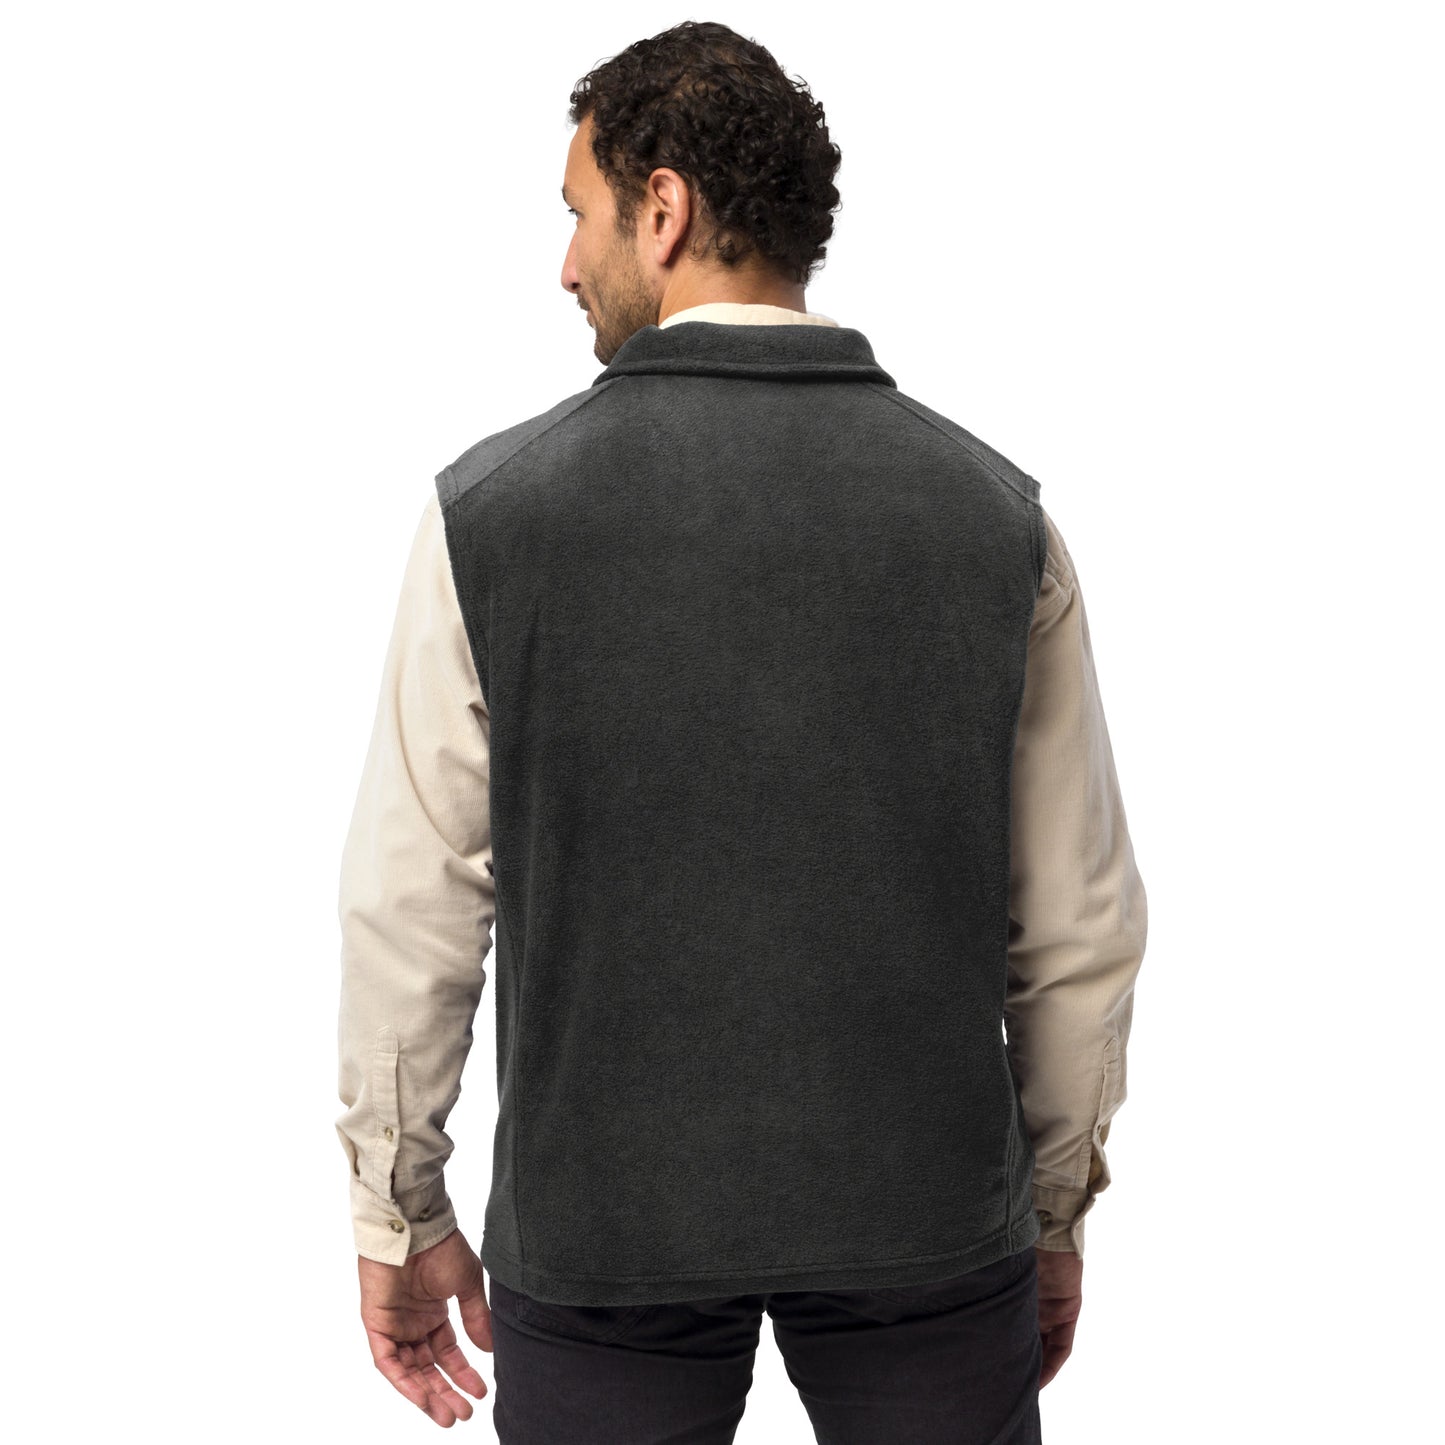 Castoff Concepts Columbia Fleece Vest